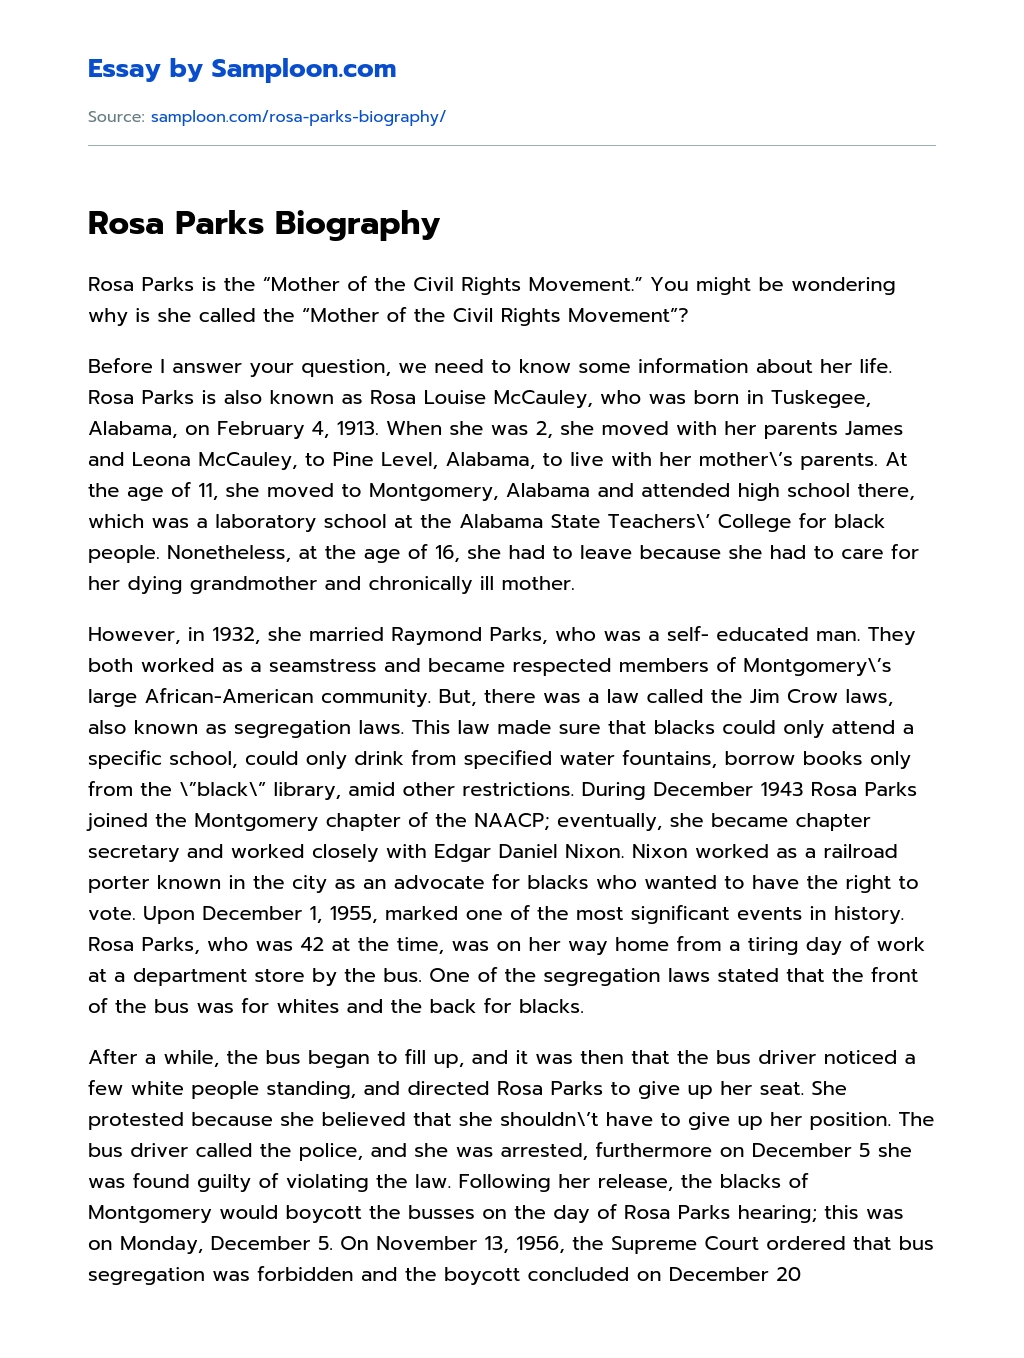 Rosa Parks Biography essay